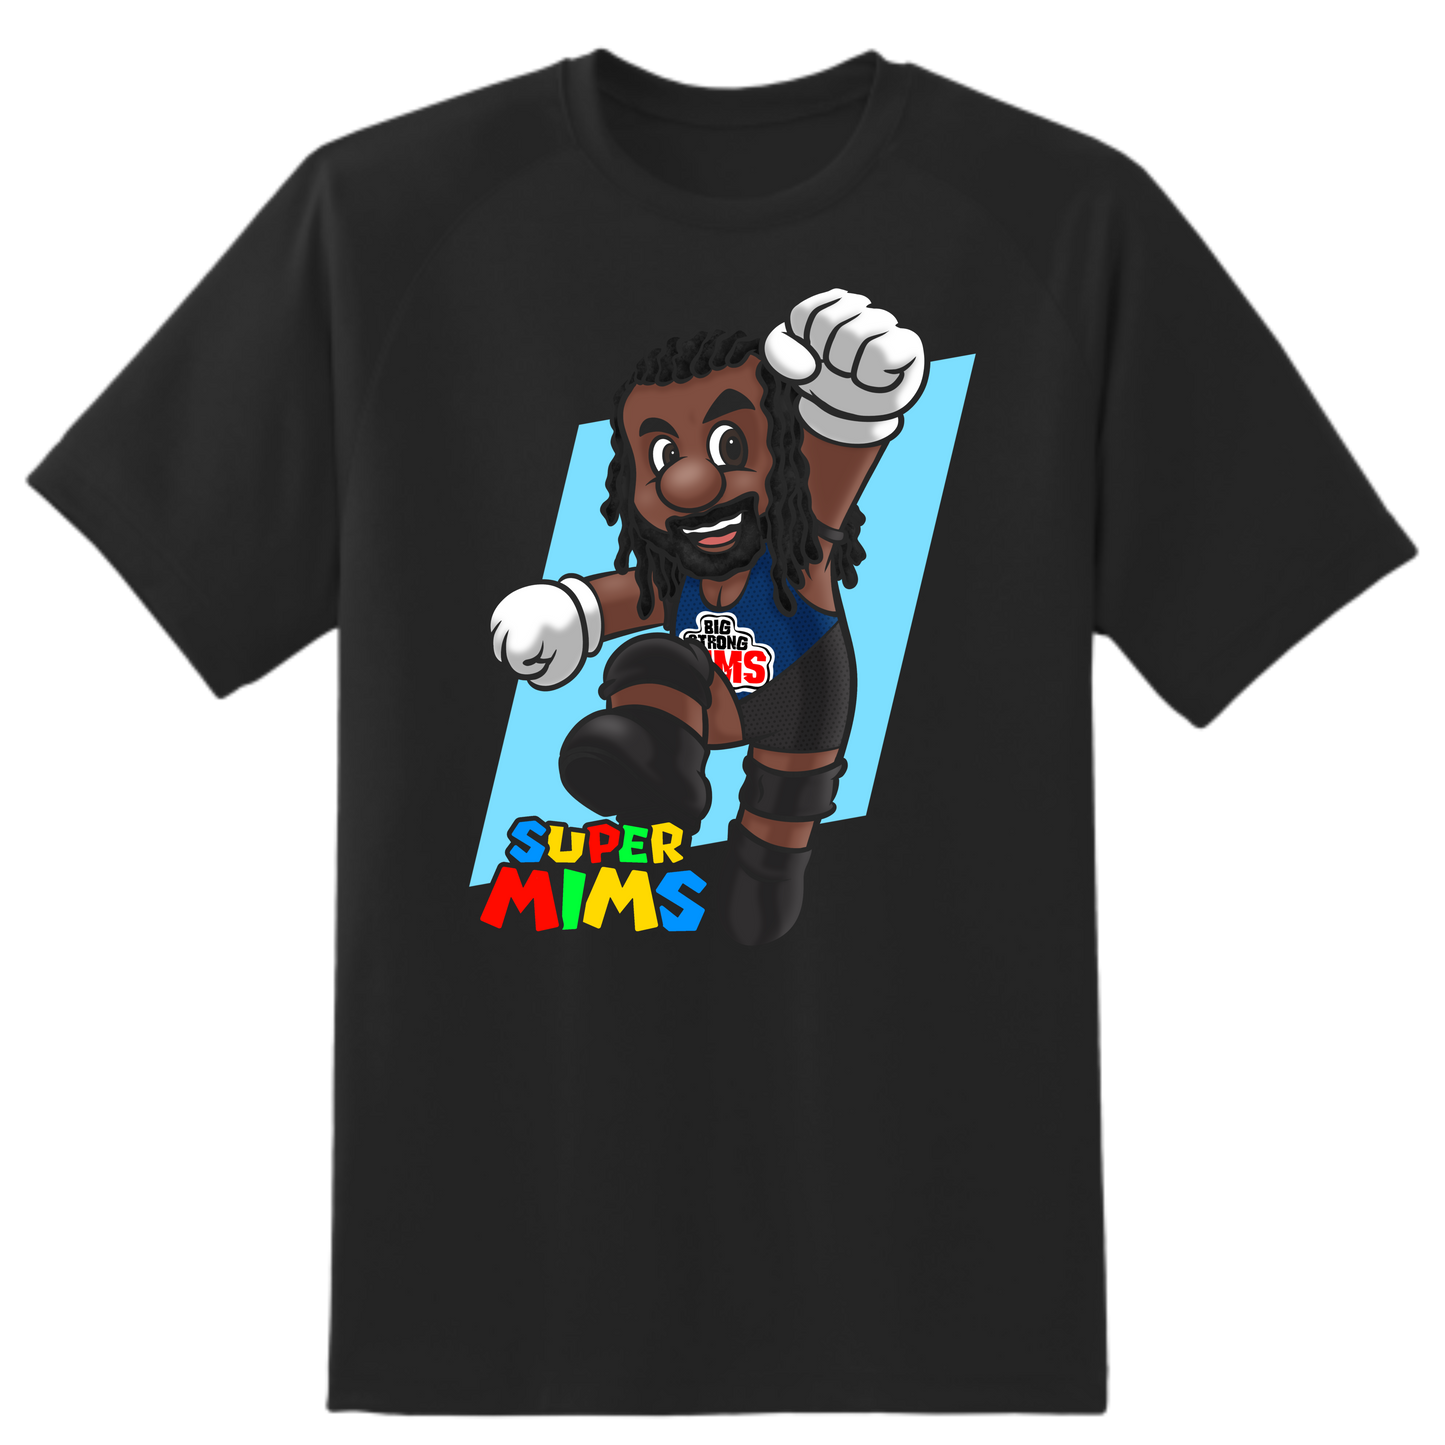 Super MIMS (T-Shirt)